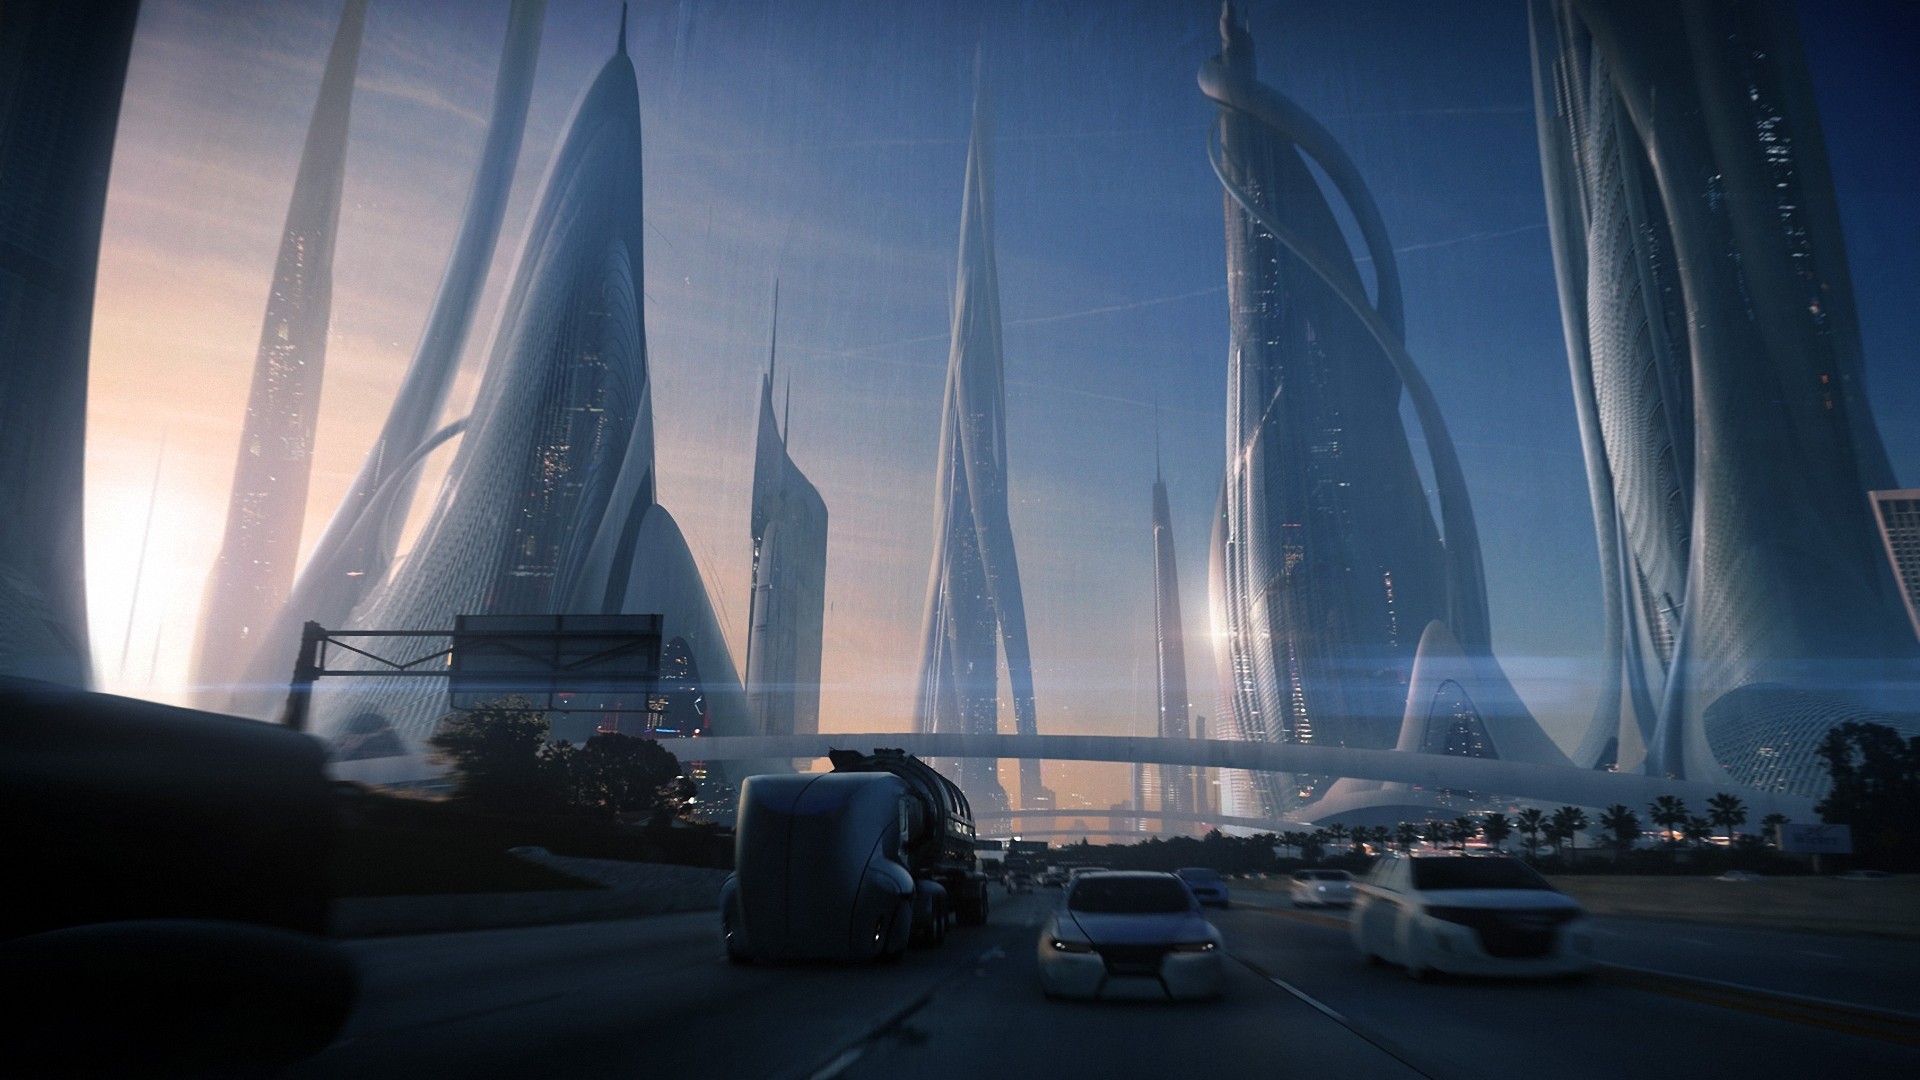 cars futuristic city design ideas by kaspersky lab